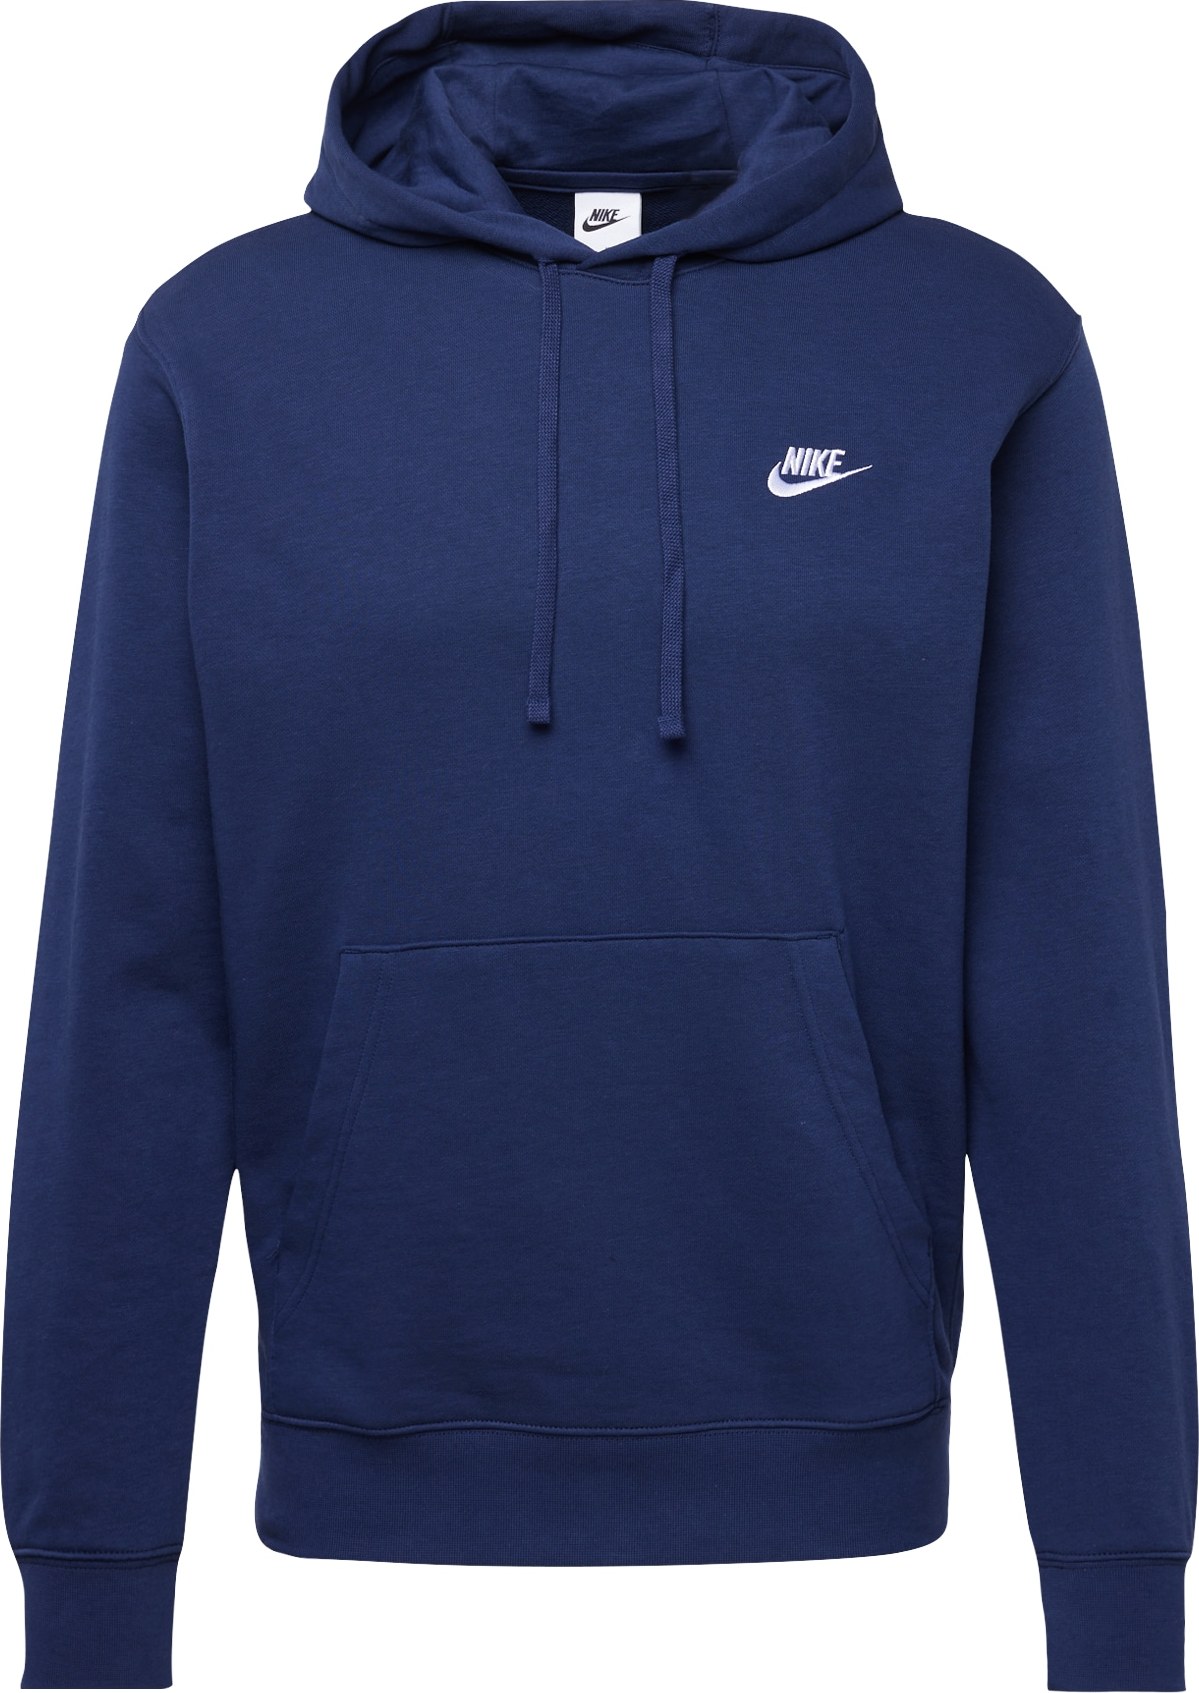 Mikina Nike Sportswear enciánová modrá / bílá